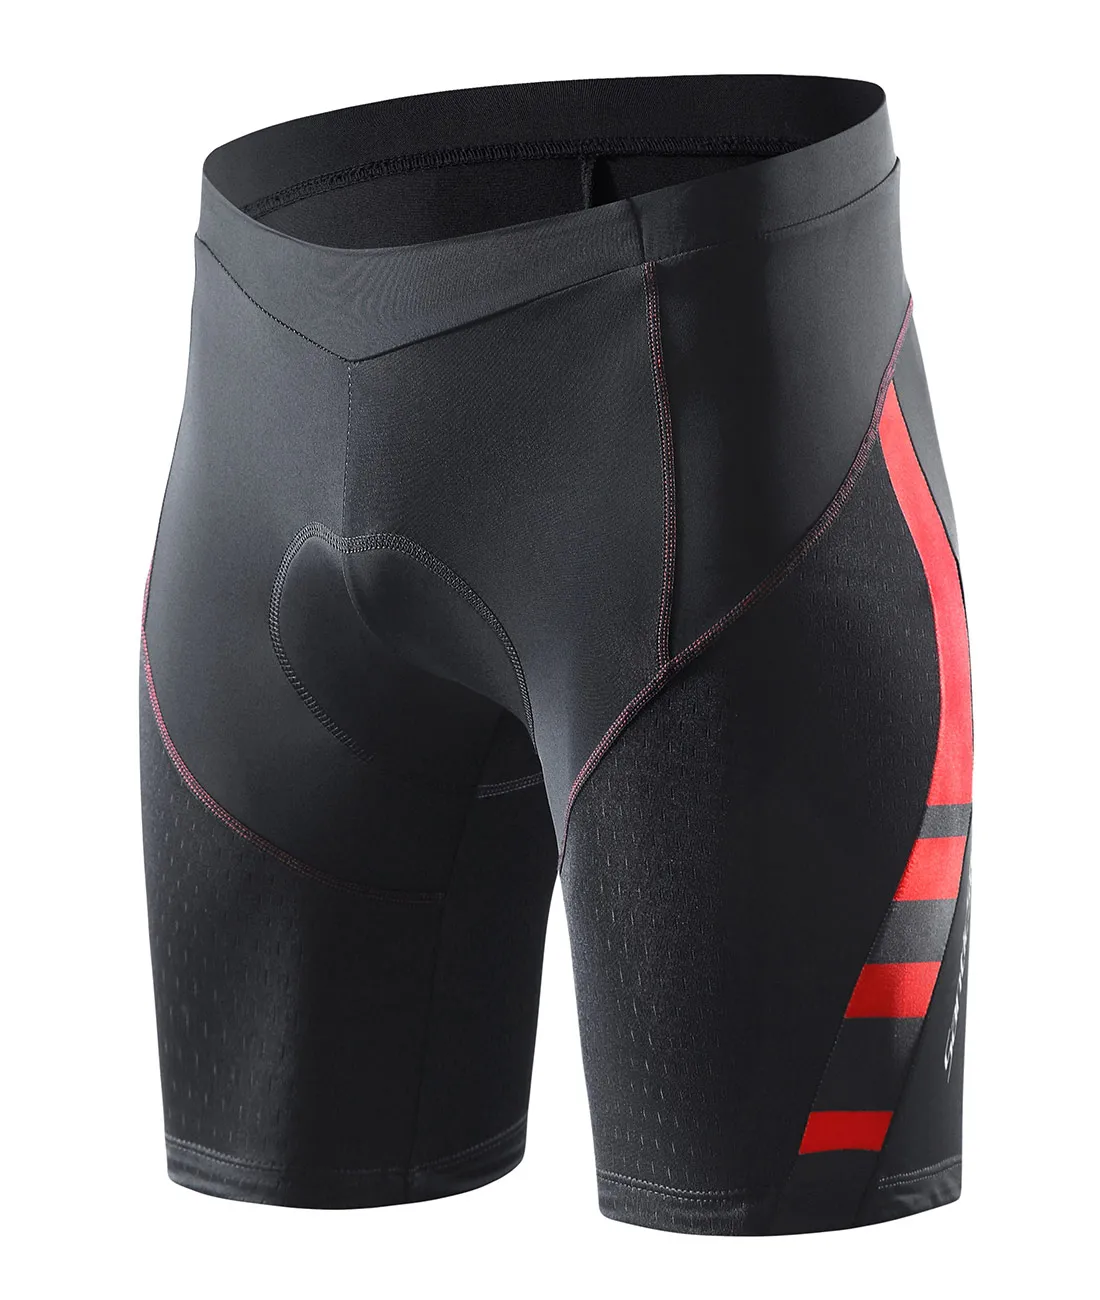 Santiska män Cycling Shorts vadderade 4d Summer Shorts Sockproof Mtb Road Bike Pro Pants Reflective Apport Bike Shorts